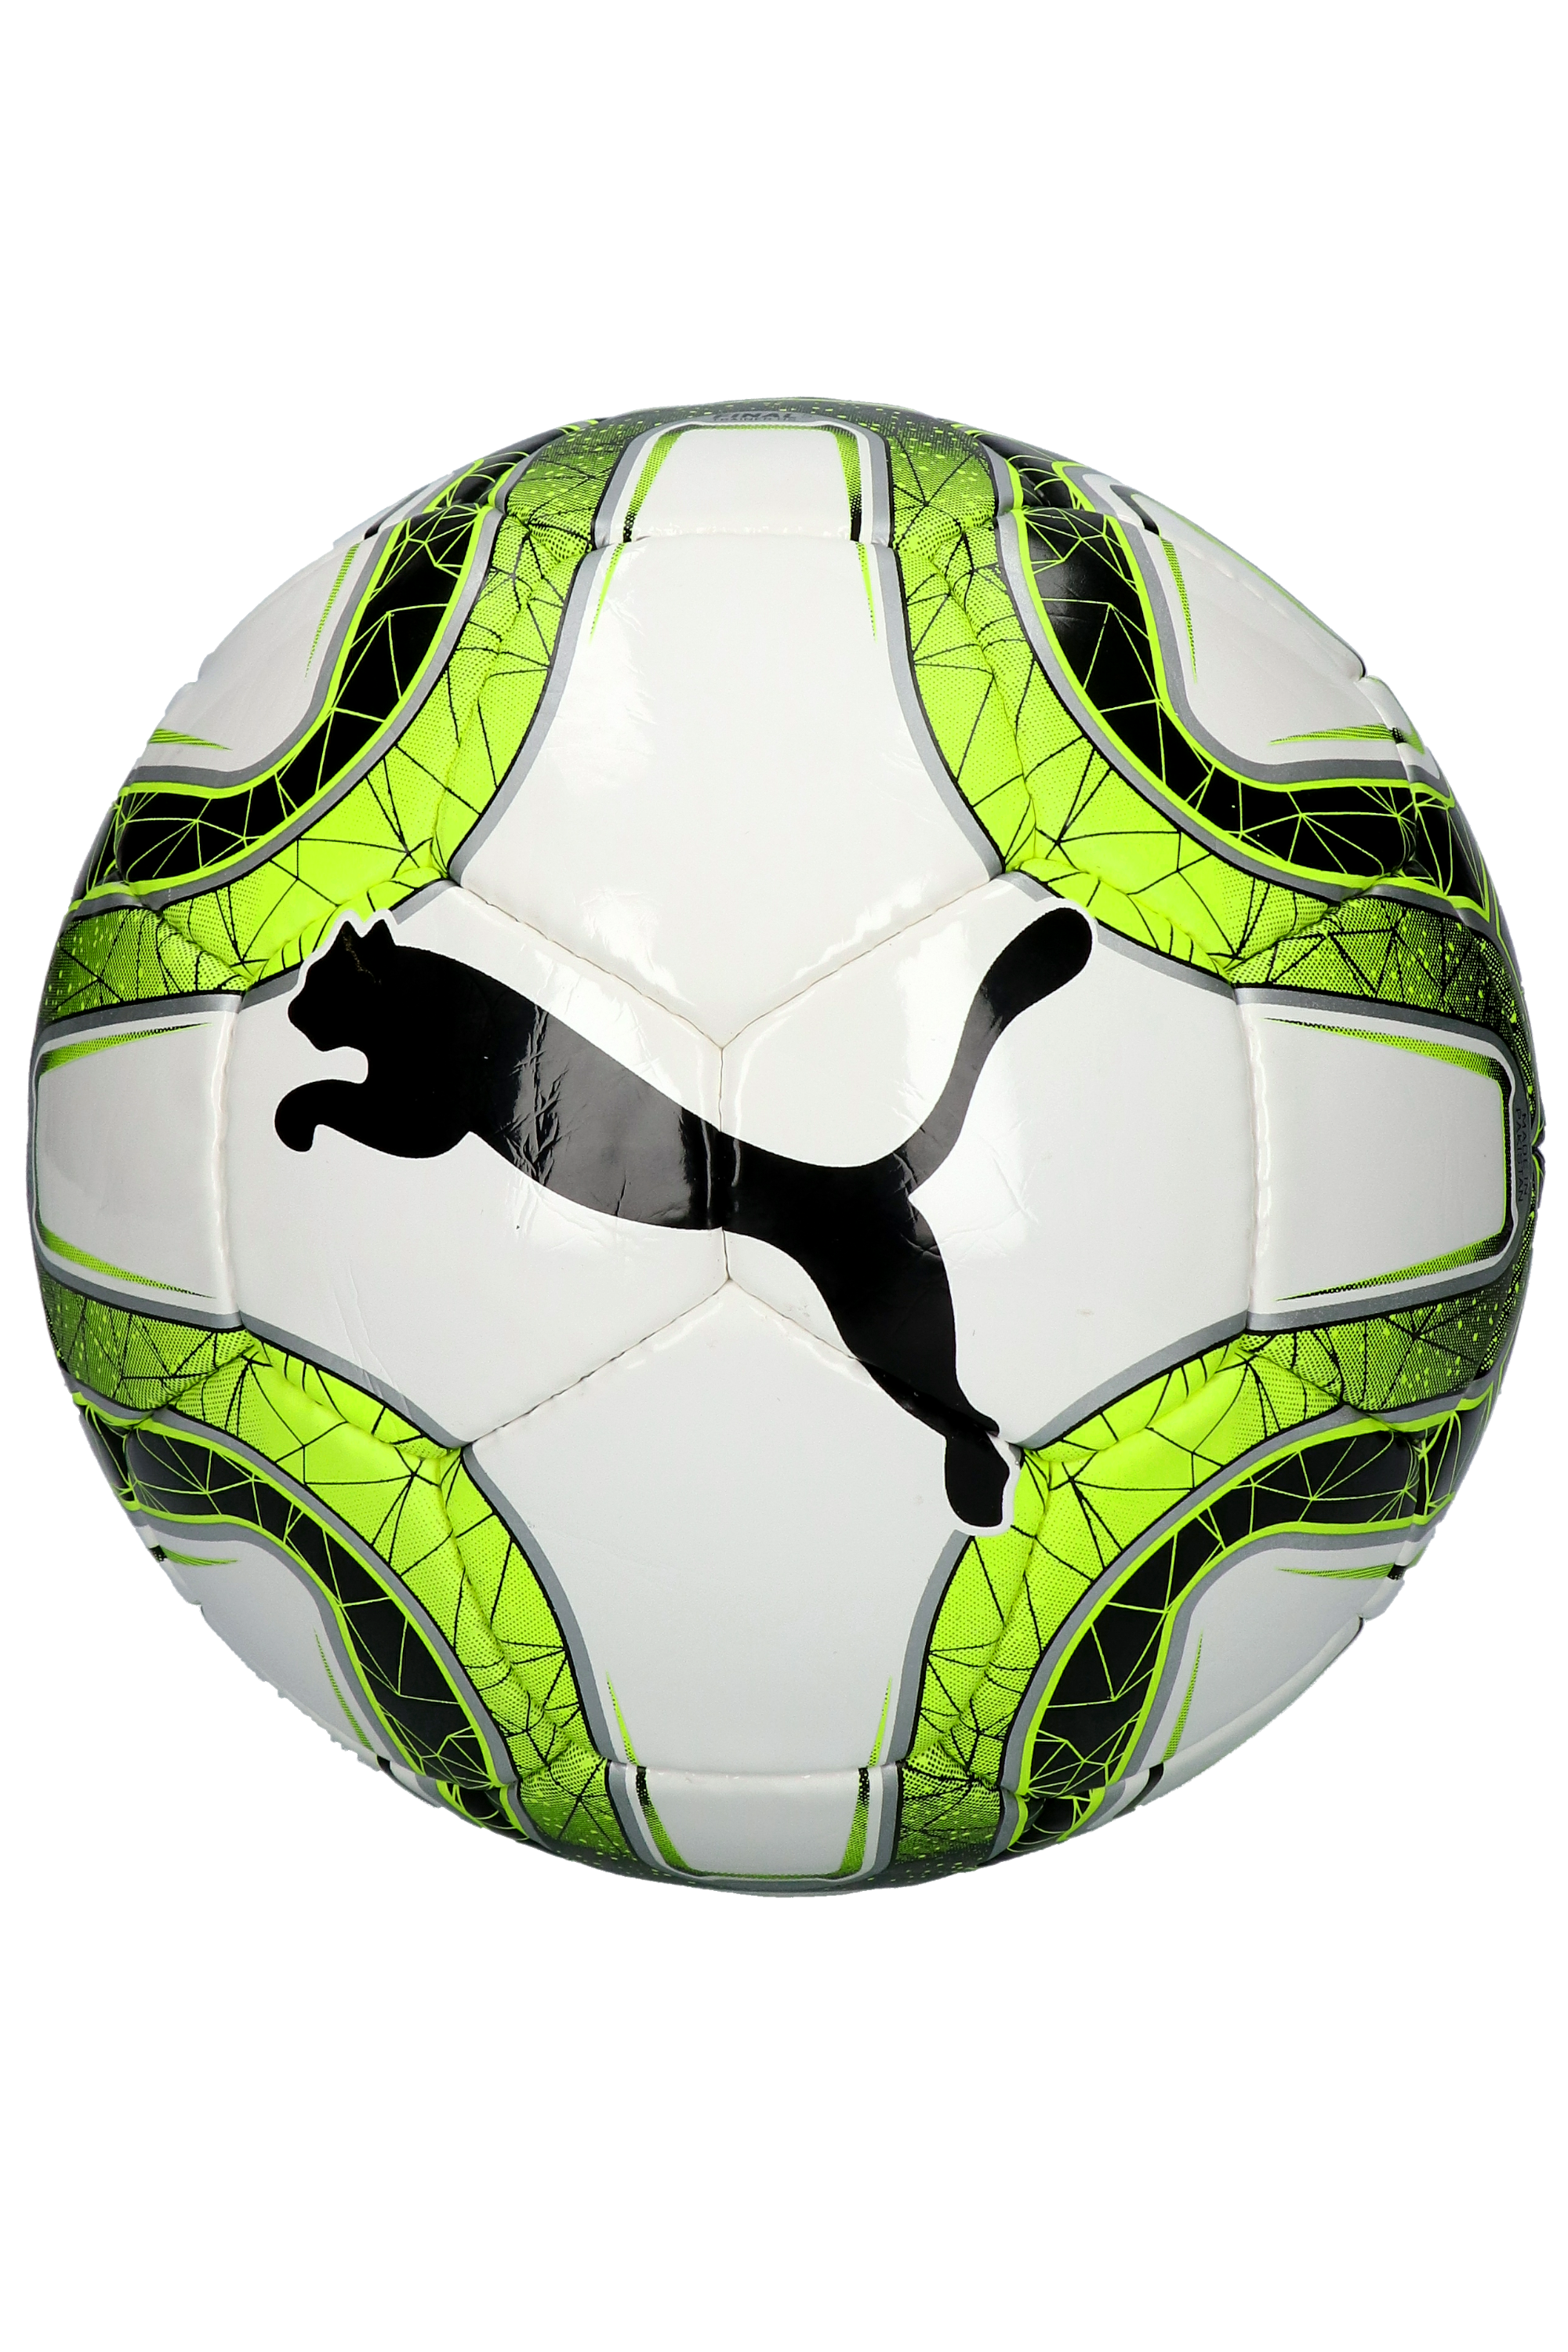 Ball Puma Final 5 HS Trainer size 5 | R-GOL.com - Football boots \u0026 equipment